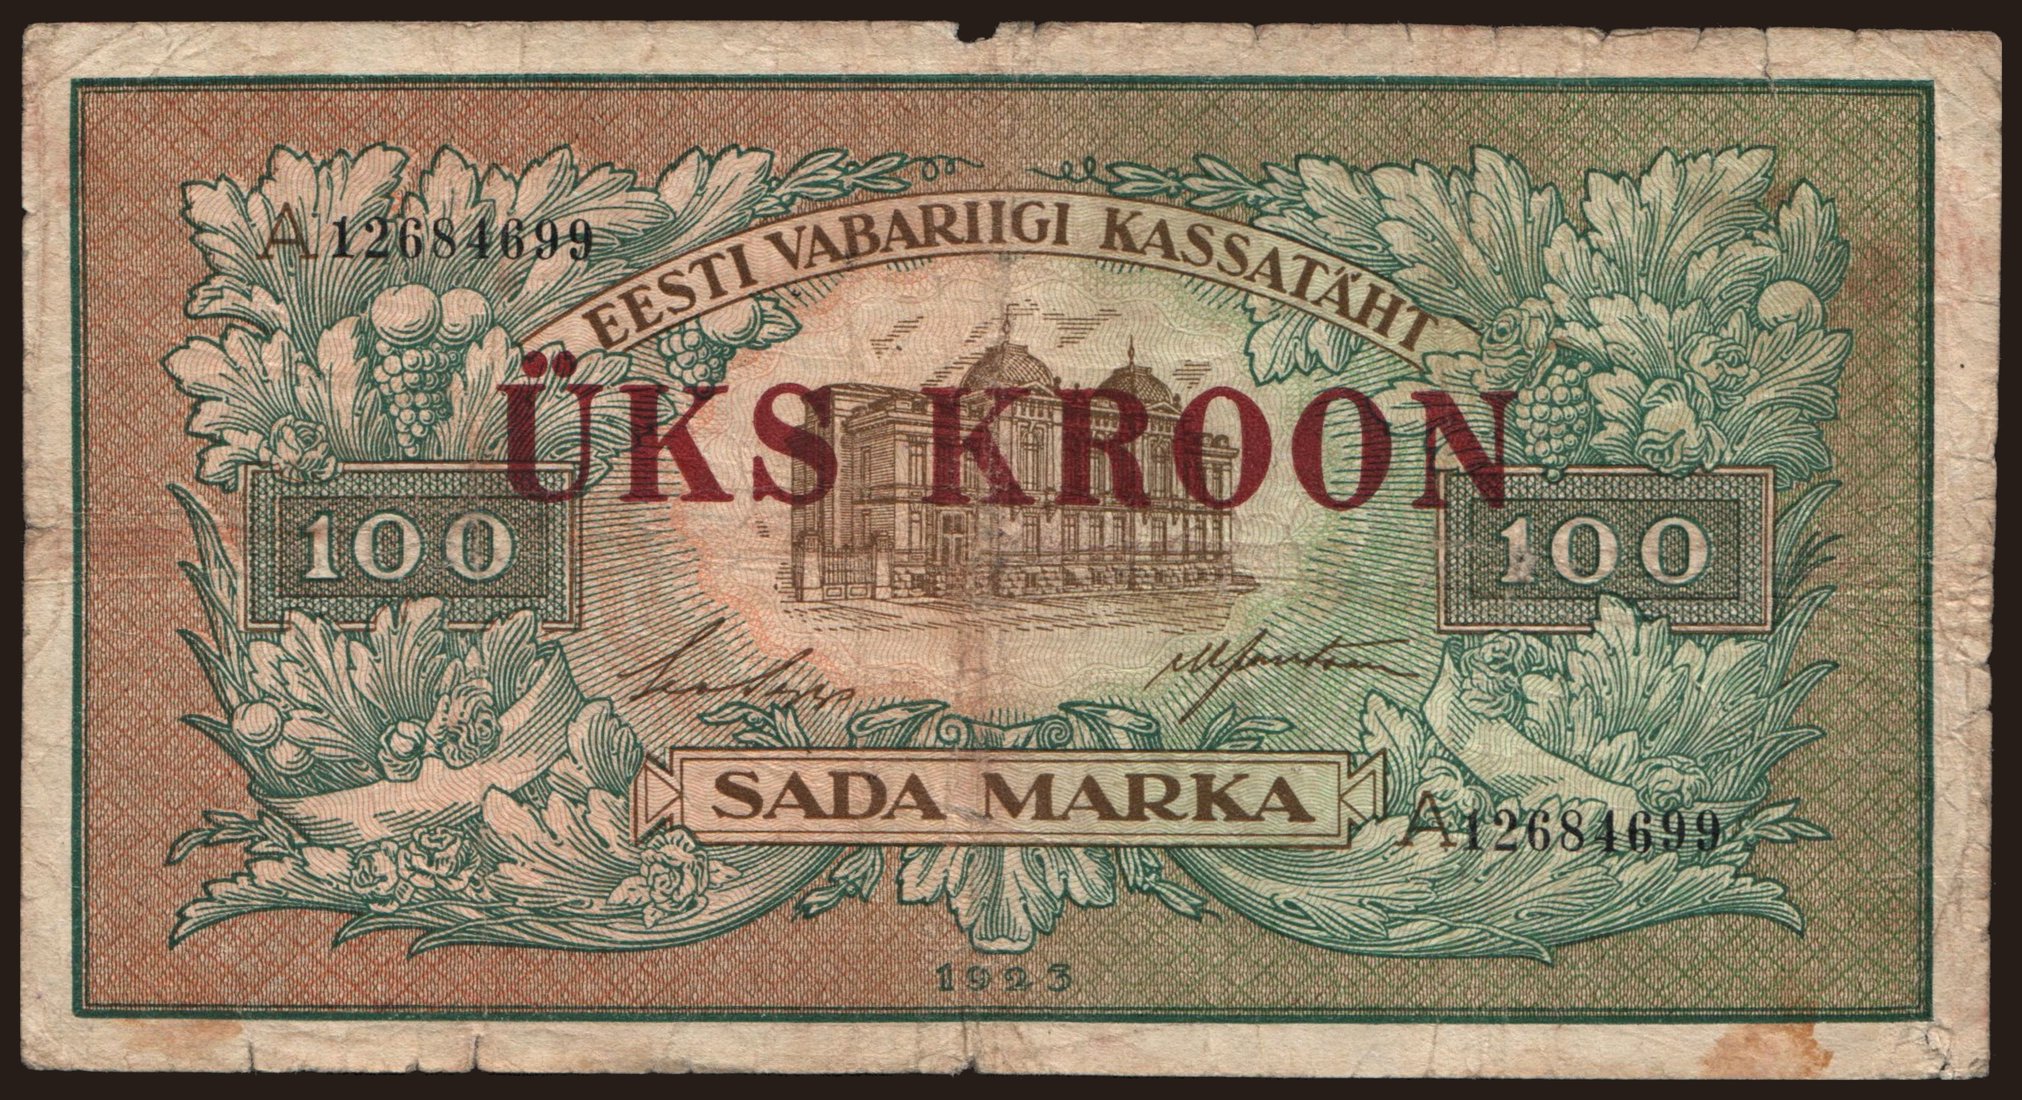 1 kroon/ 100 marka, 1928